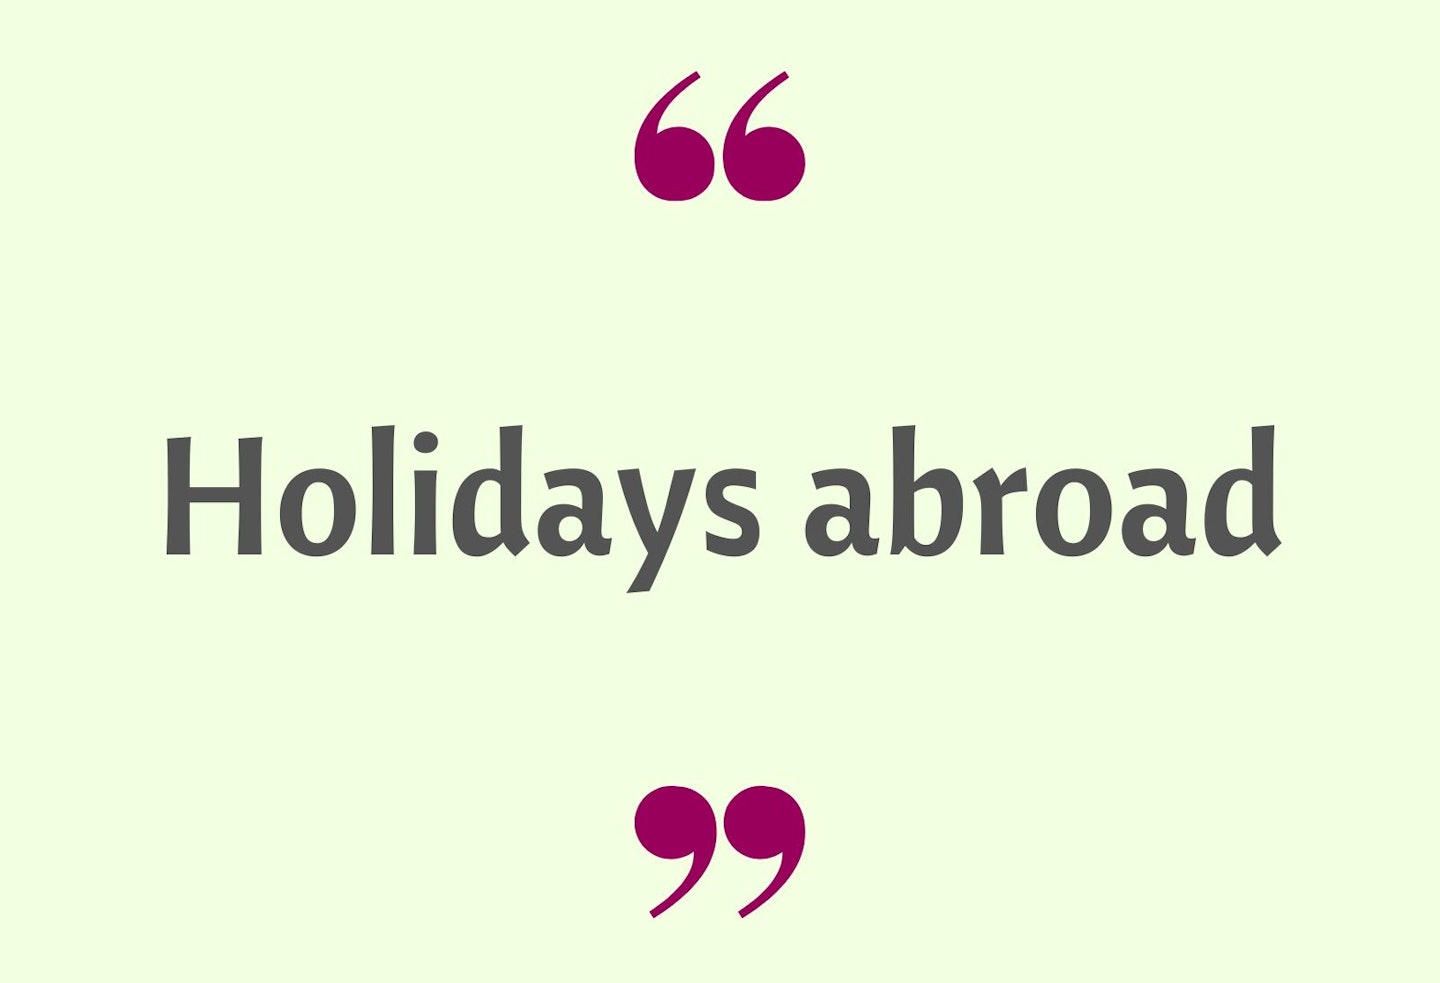 20) Holidays abroad